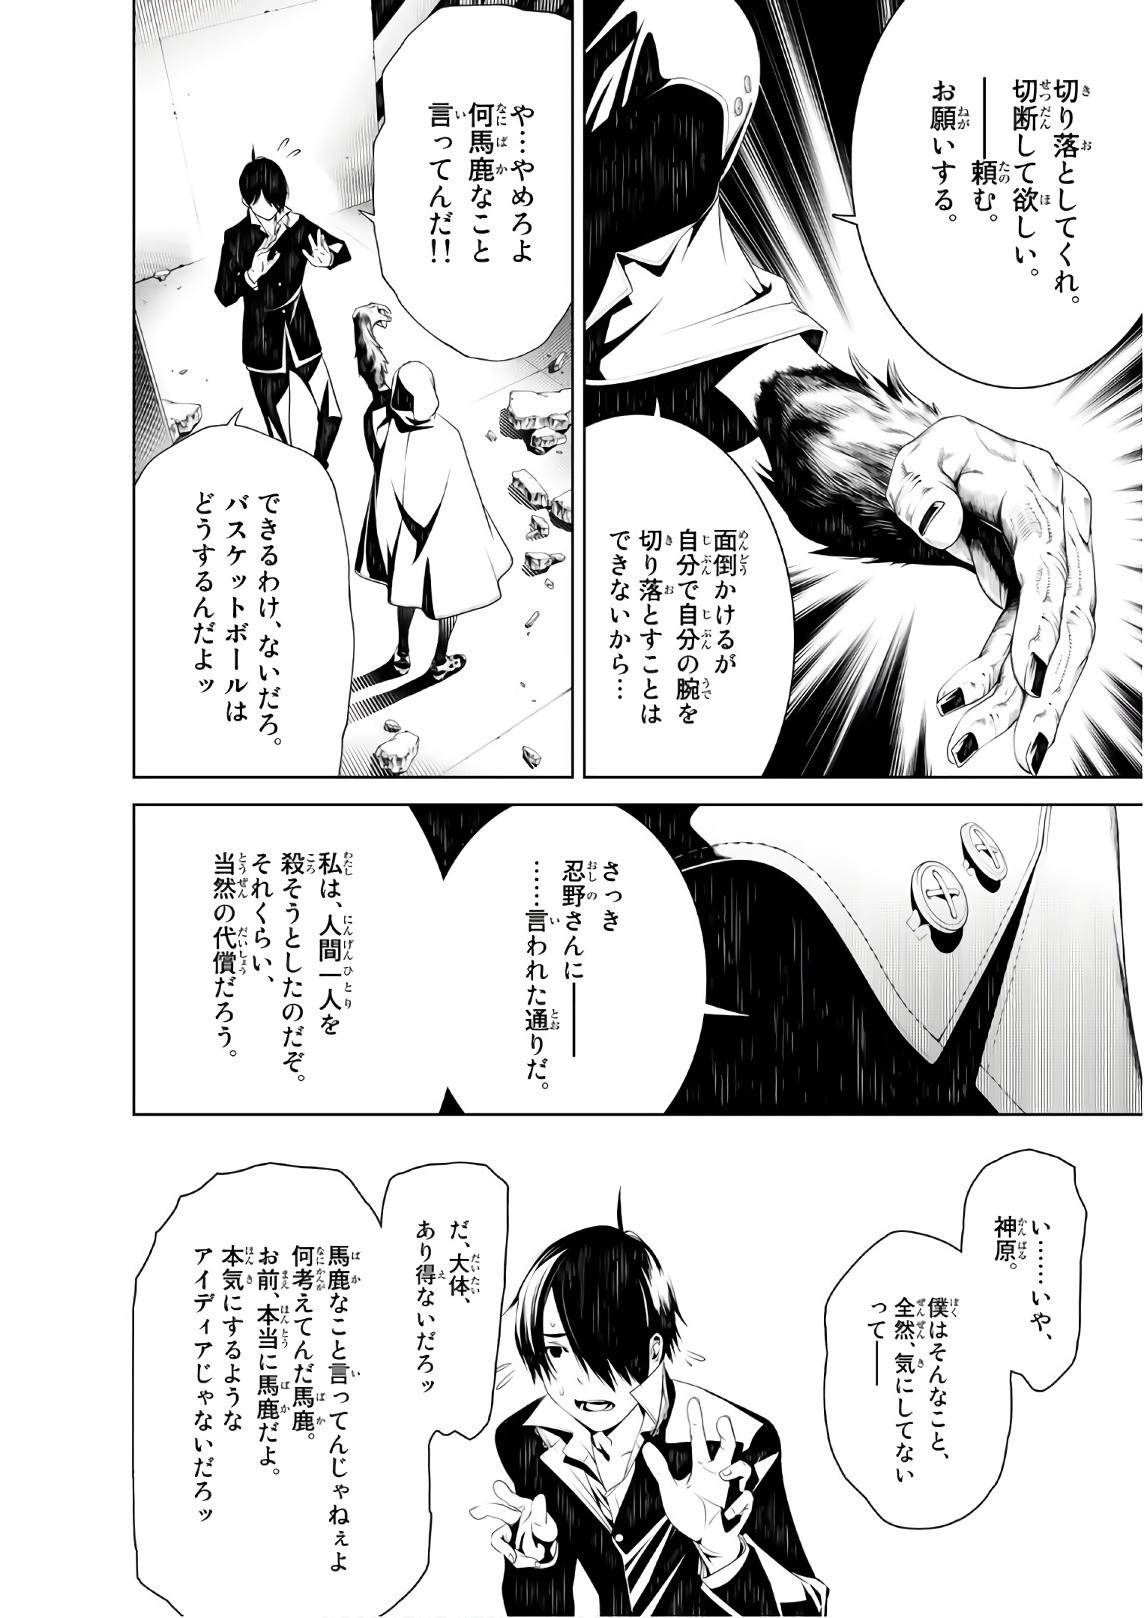 Bakemonogatari - Chapter 39 - Page 16